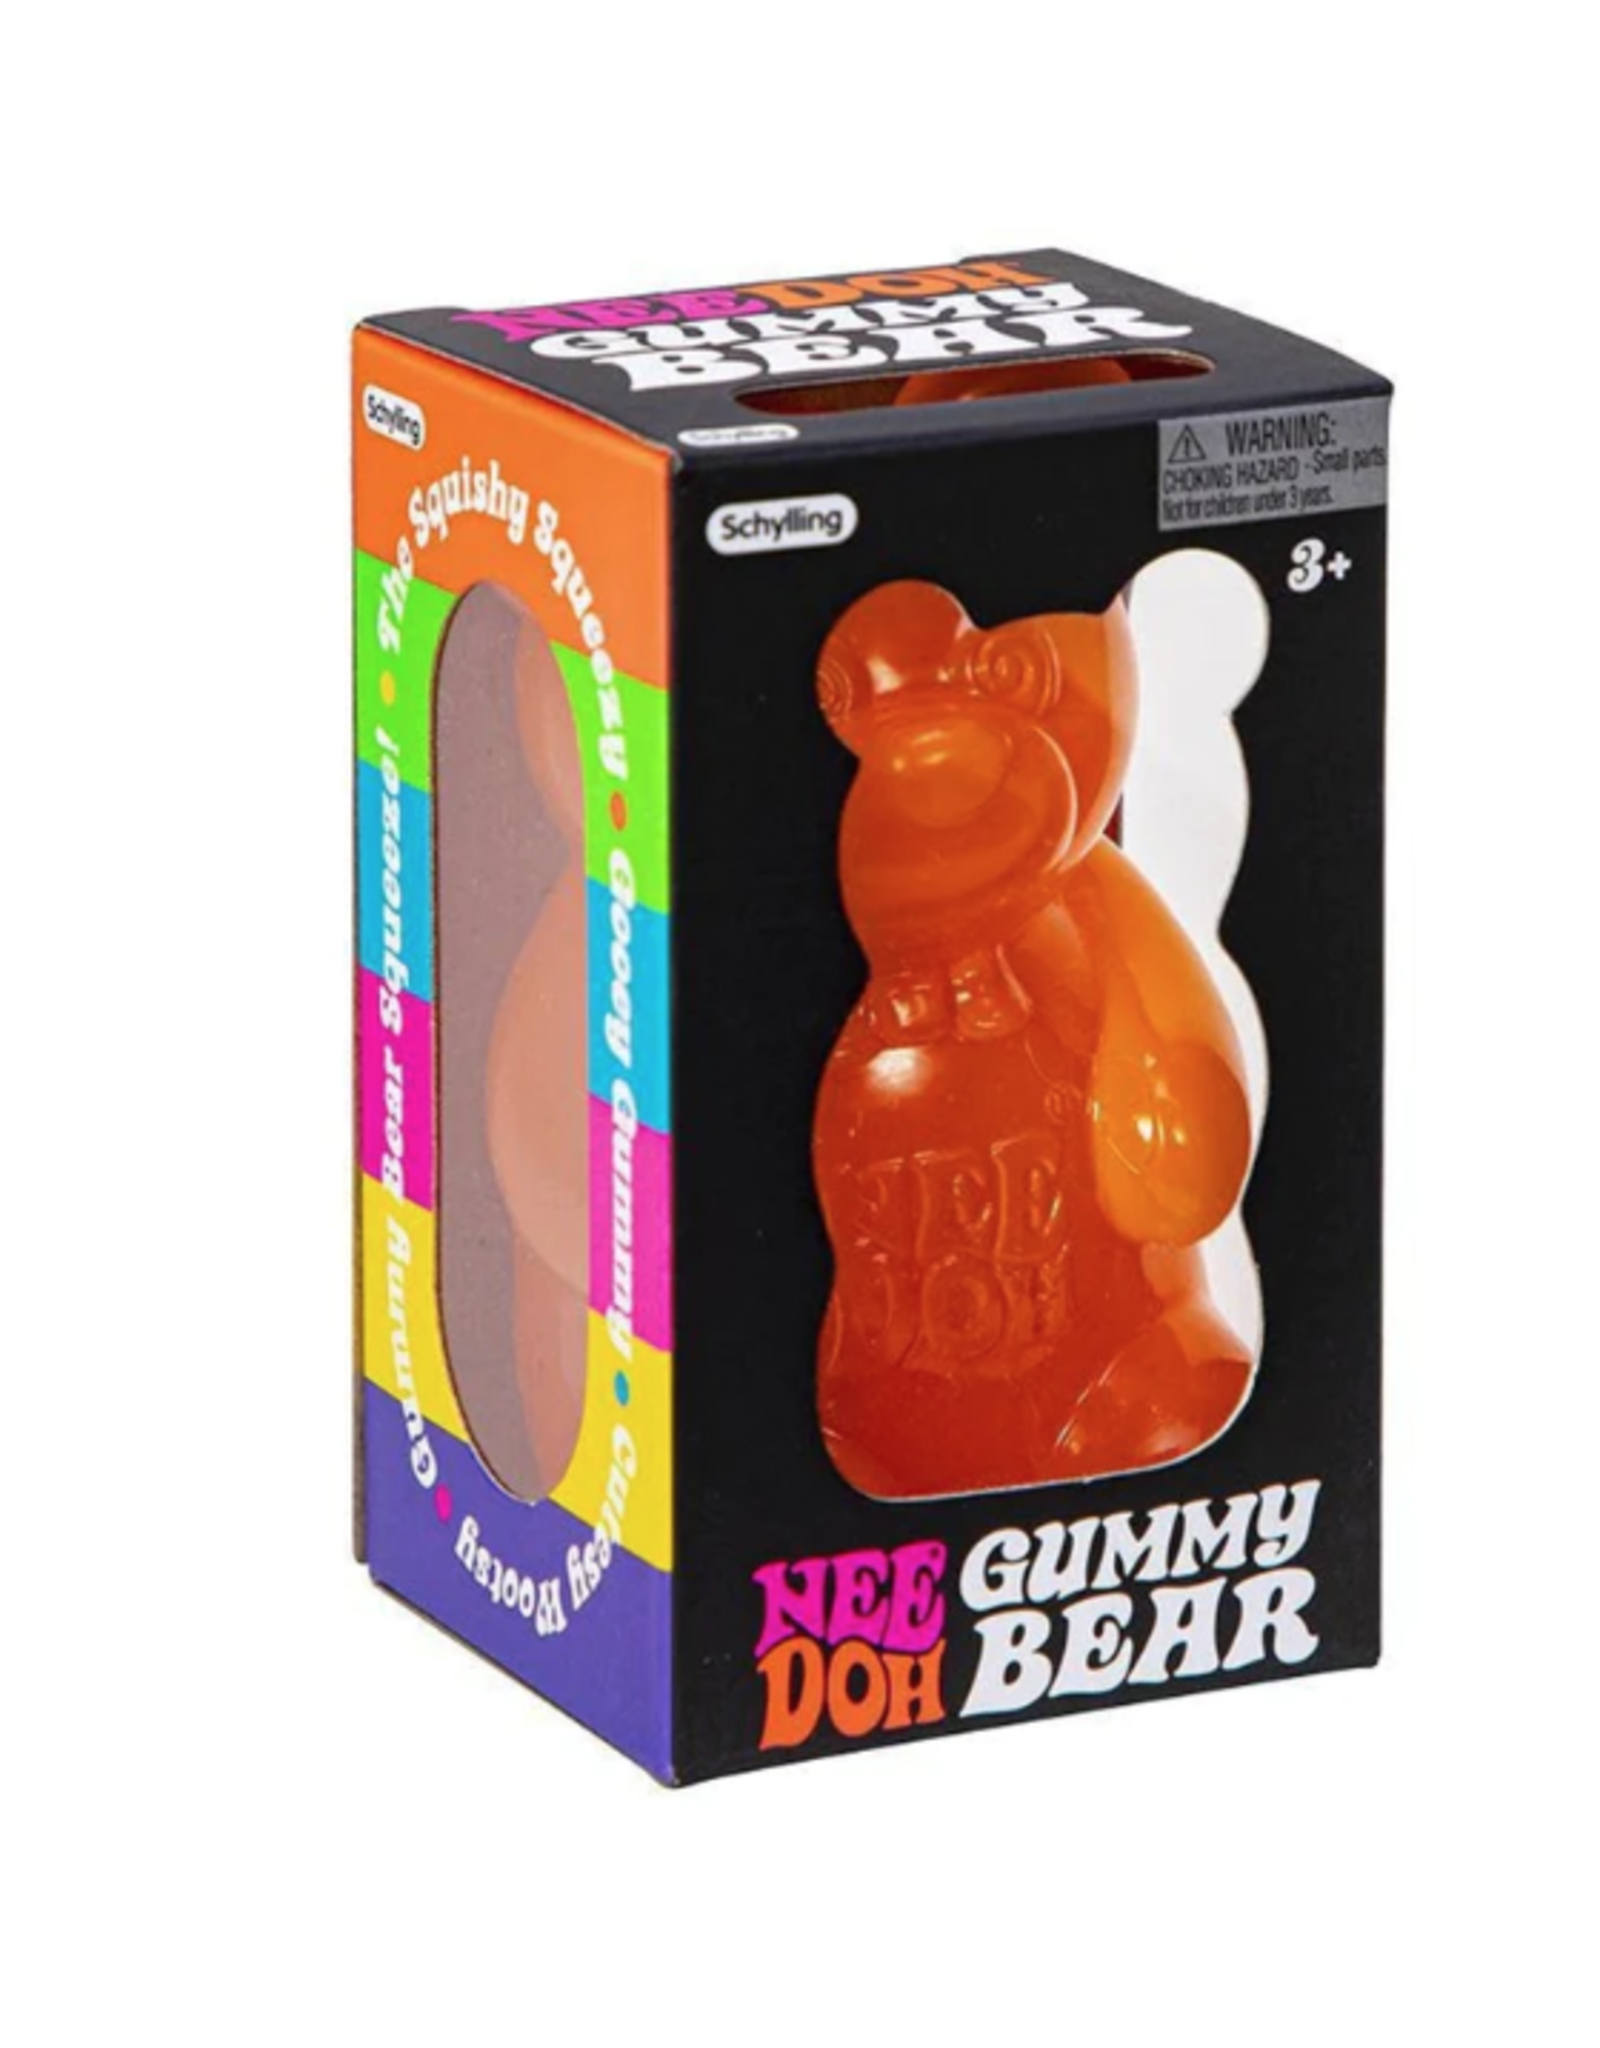 Sweet Gummy Bear Song - Gummy Bear Song - Magnet